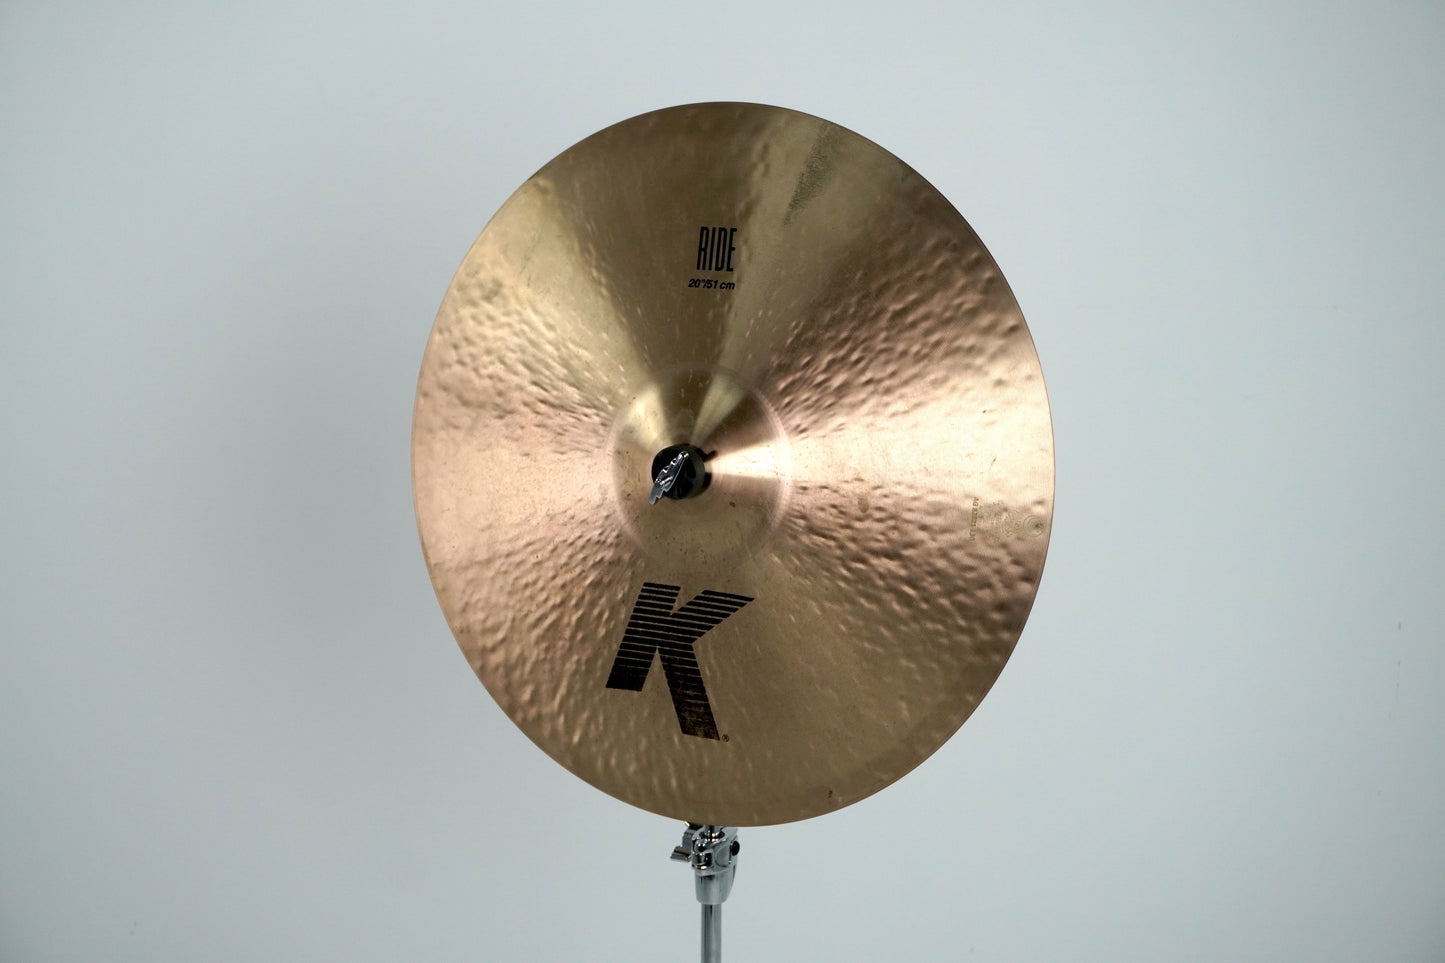 Zildjian 20” K Series Custom Ride Cymbal